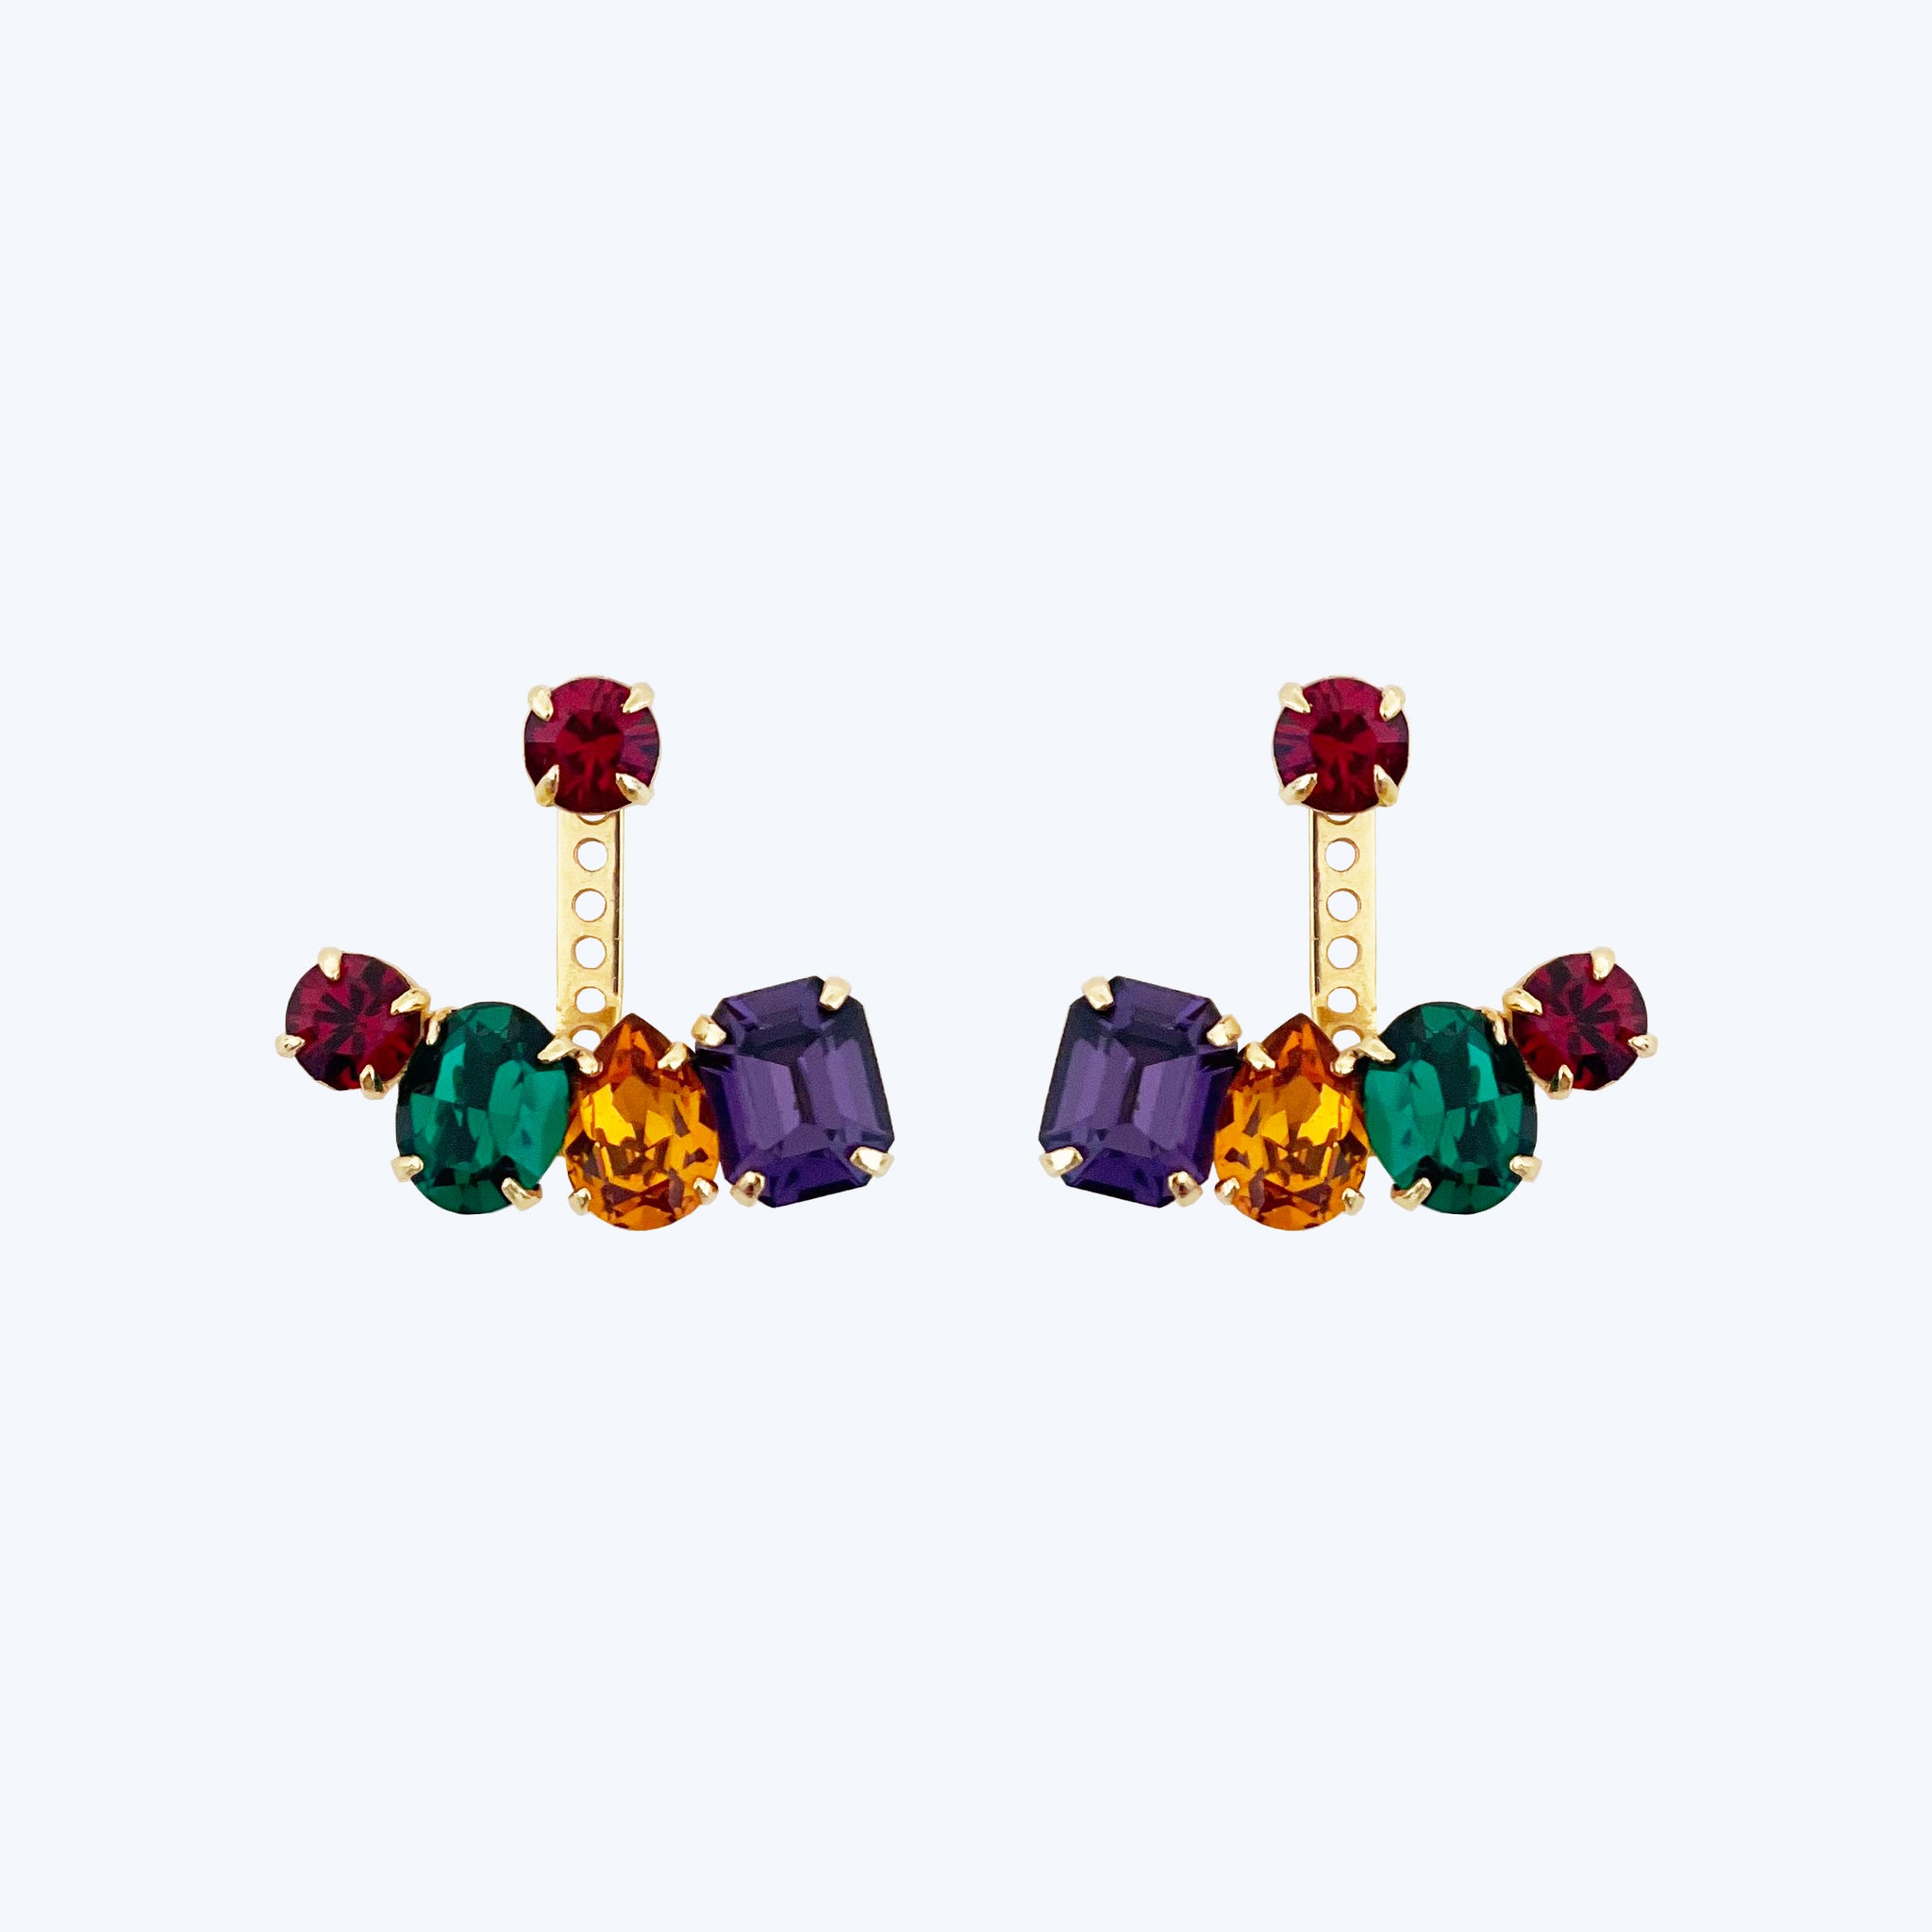 "A Jewel Thing" Earrings